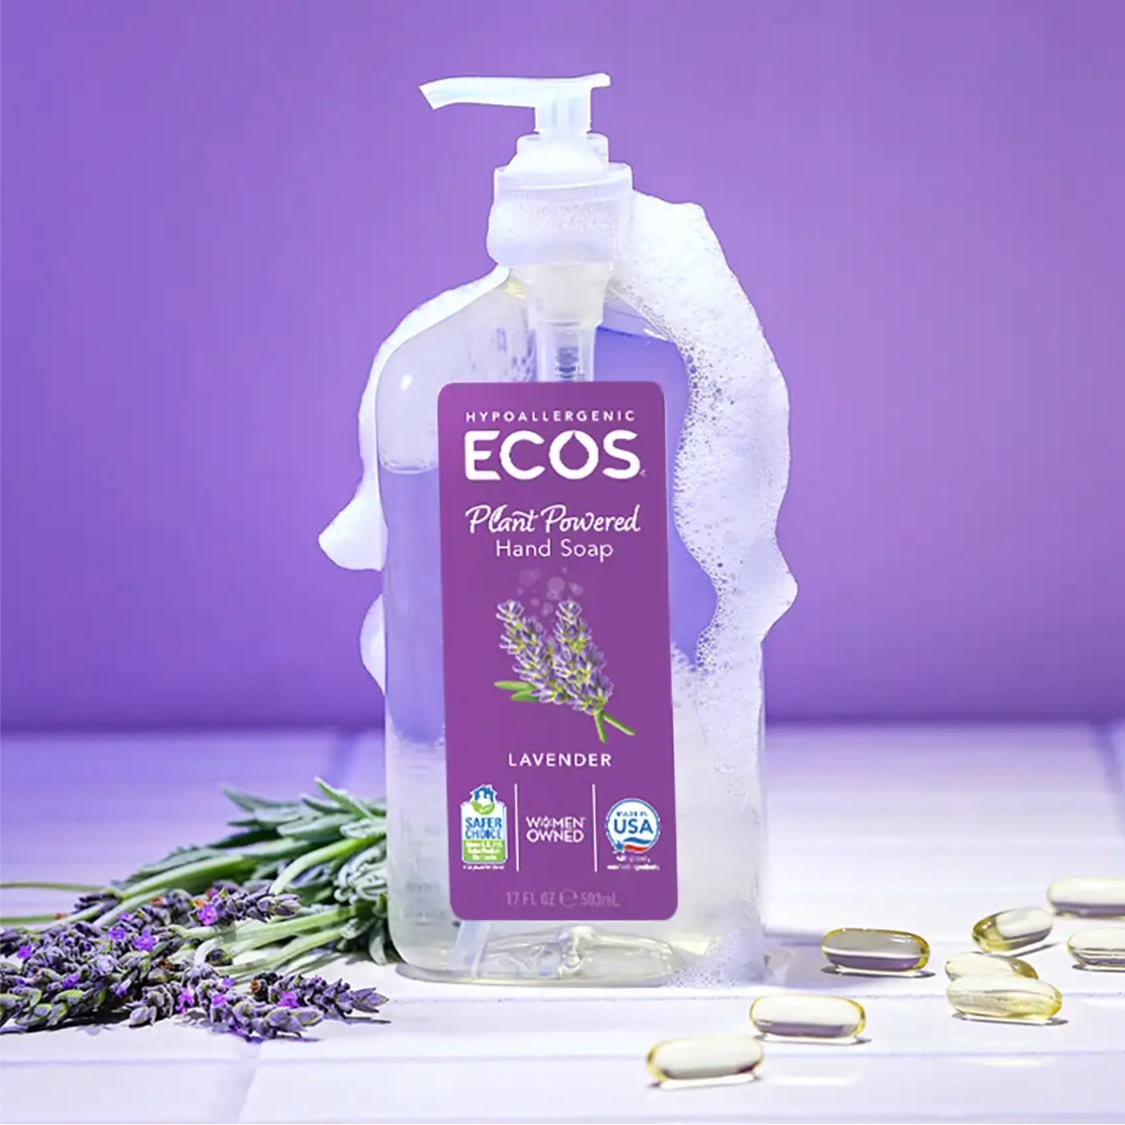 ECOS hand soap